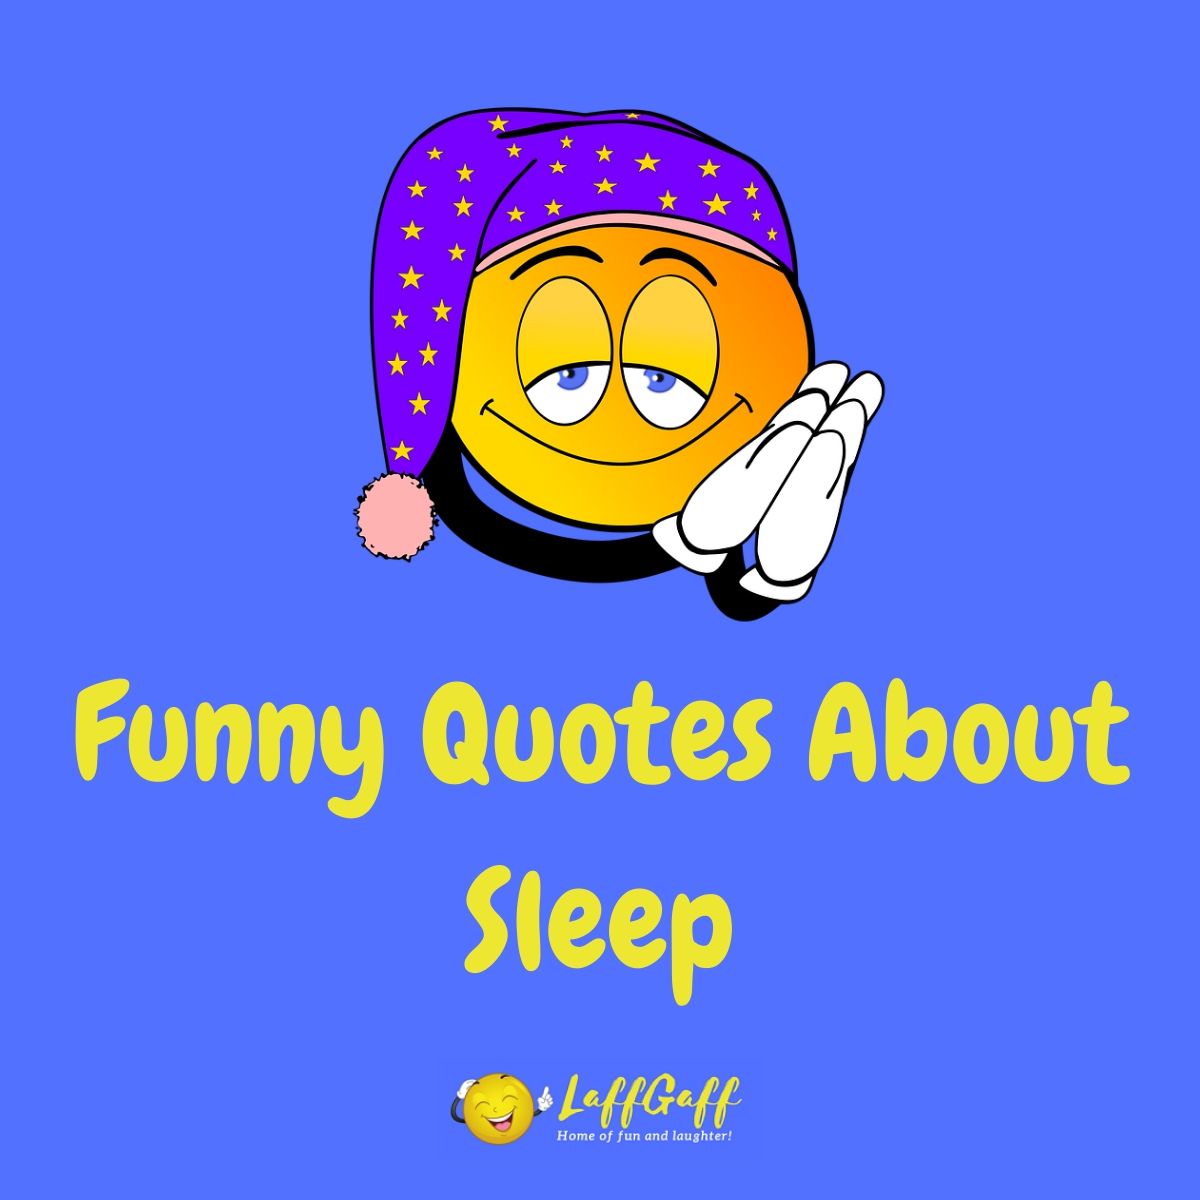 I am sleepy quotes